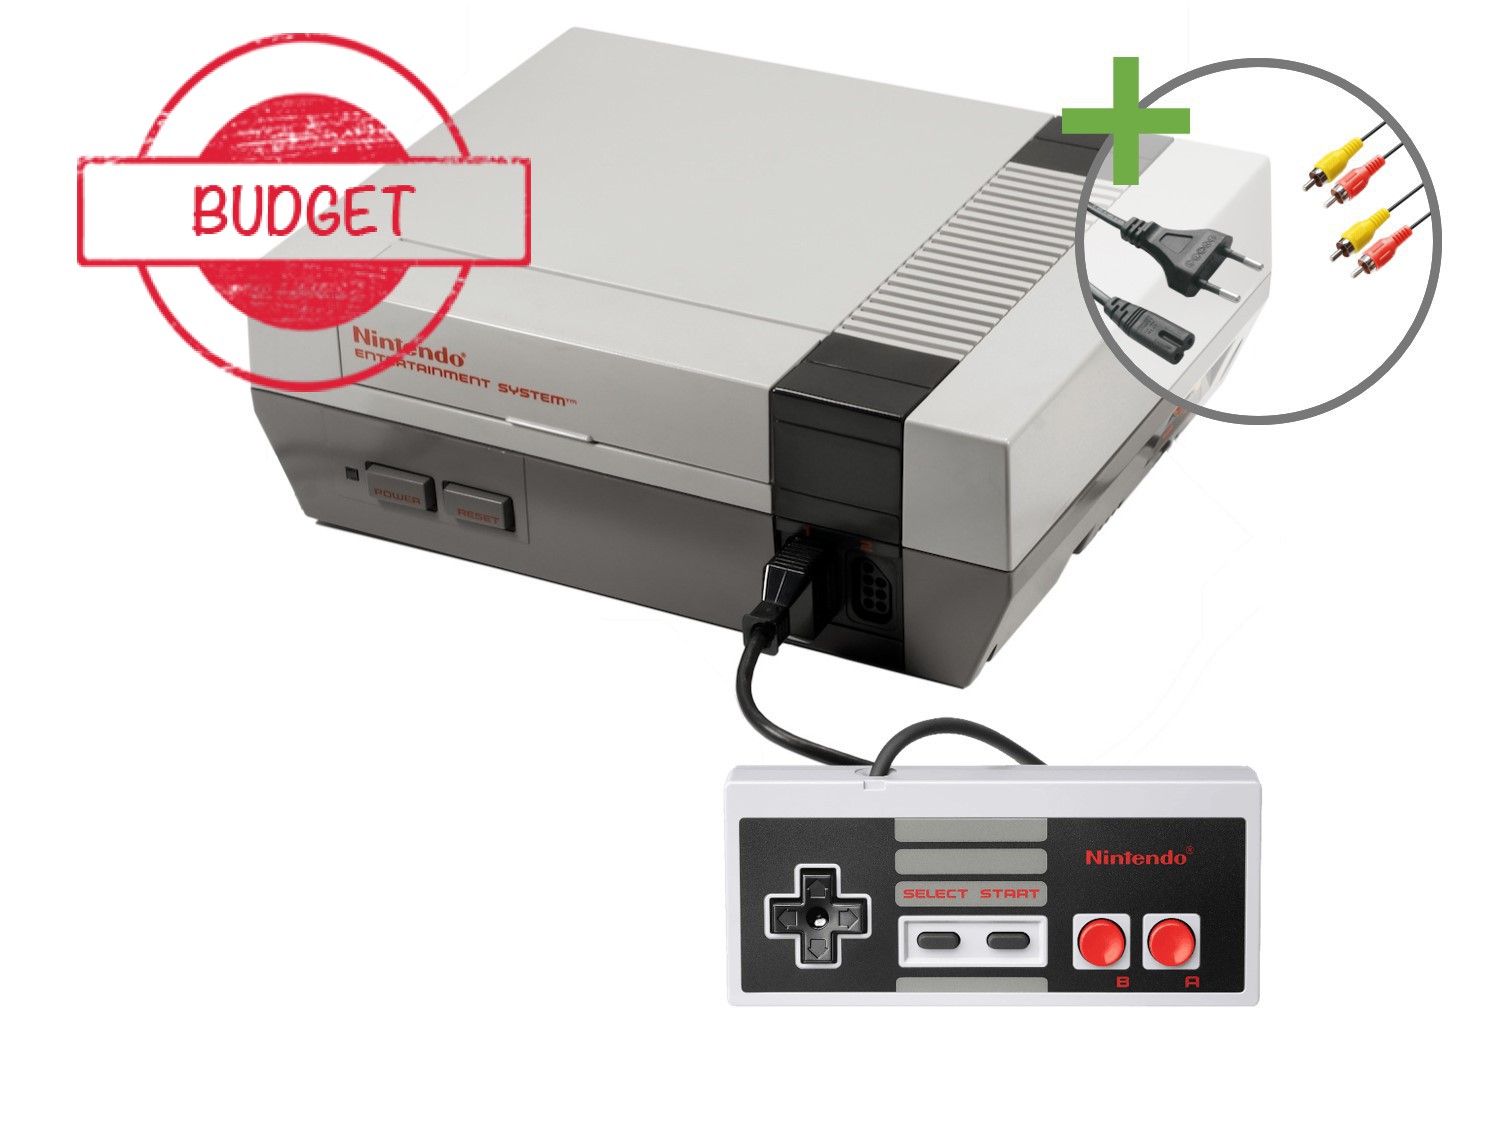 Nintendo NES Starter Pack - Control Deck Edition - Budget - Nintendo NES Hardware